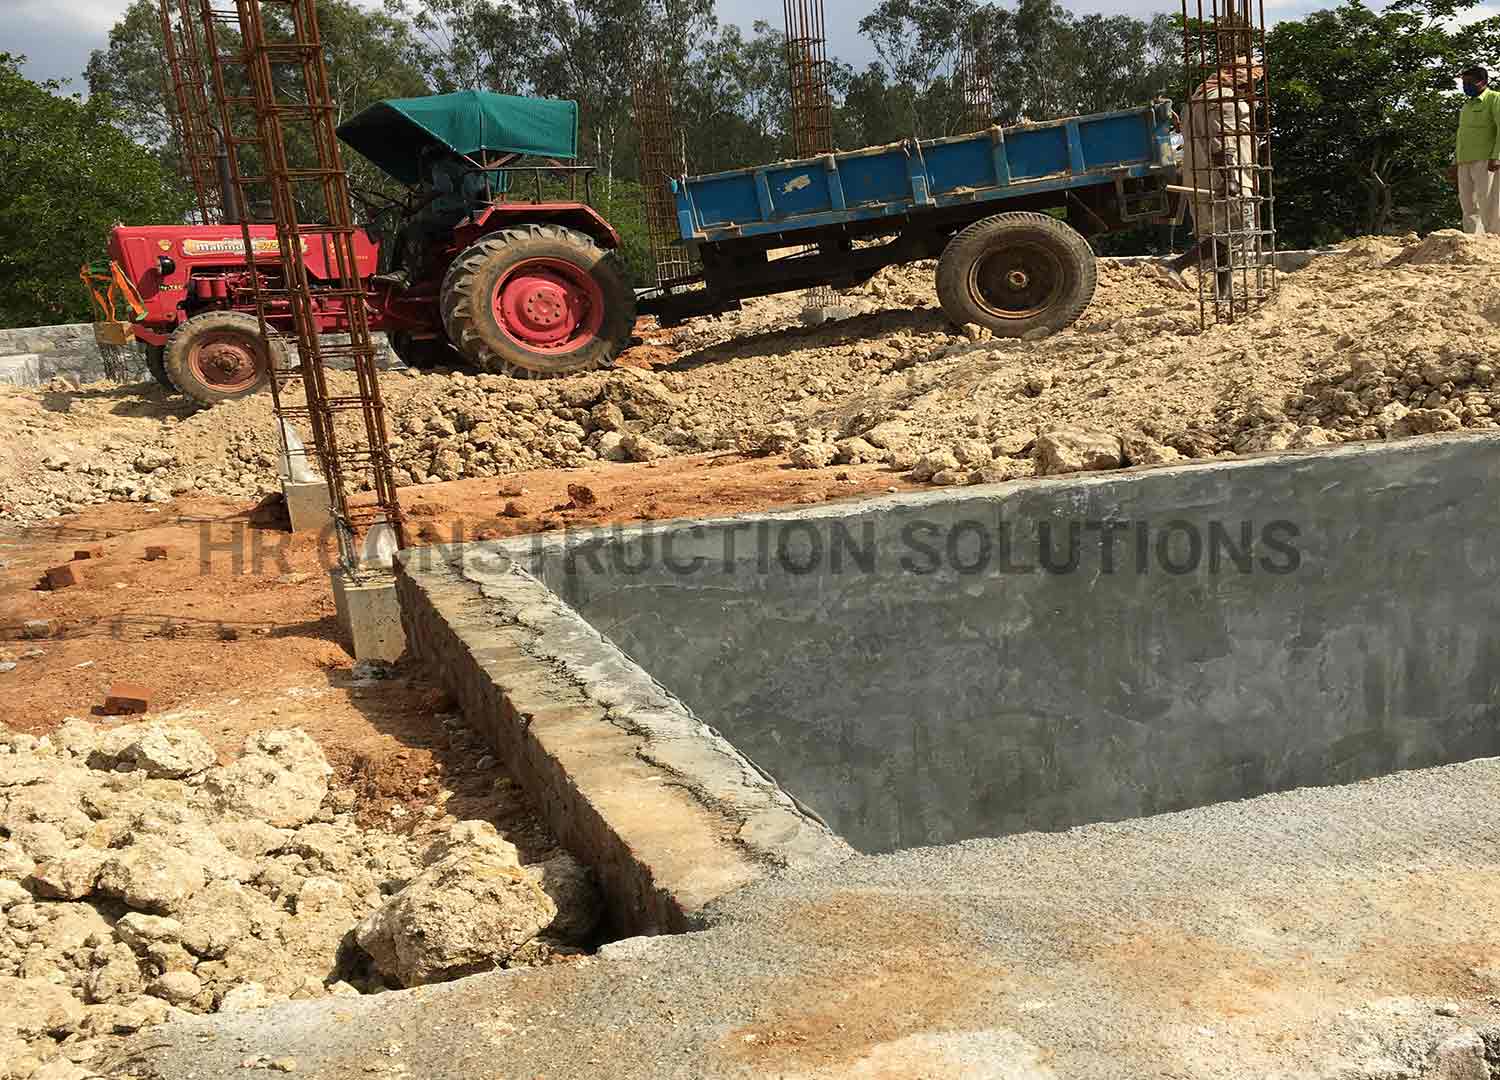 Manu Home | HRConstructionsolutions I Bangalore